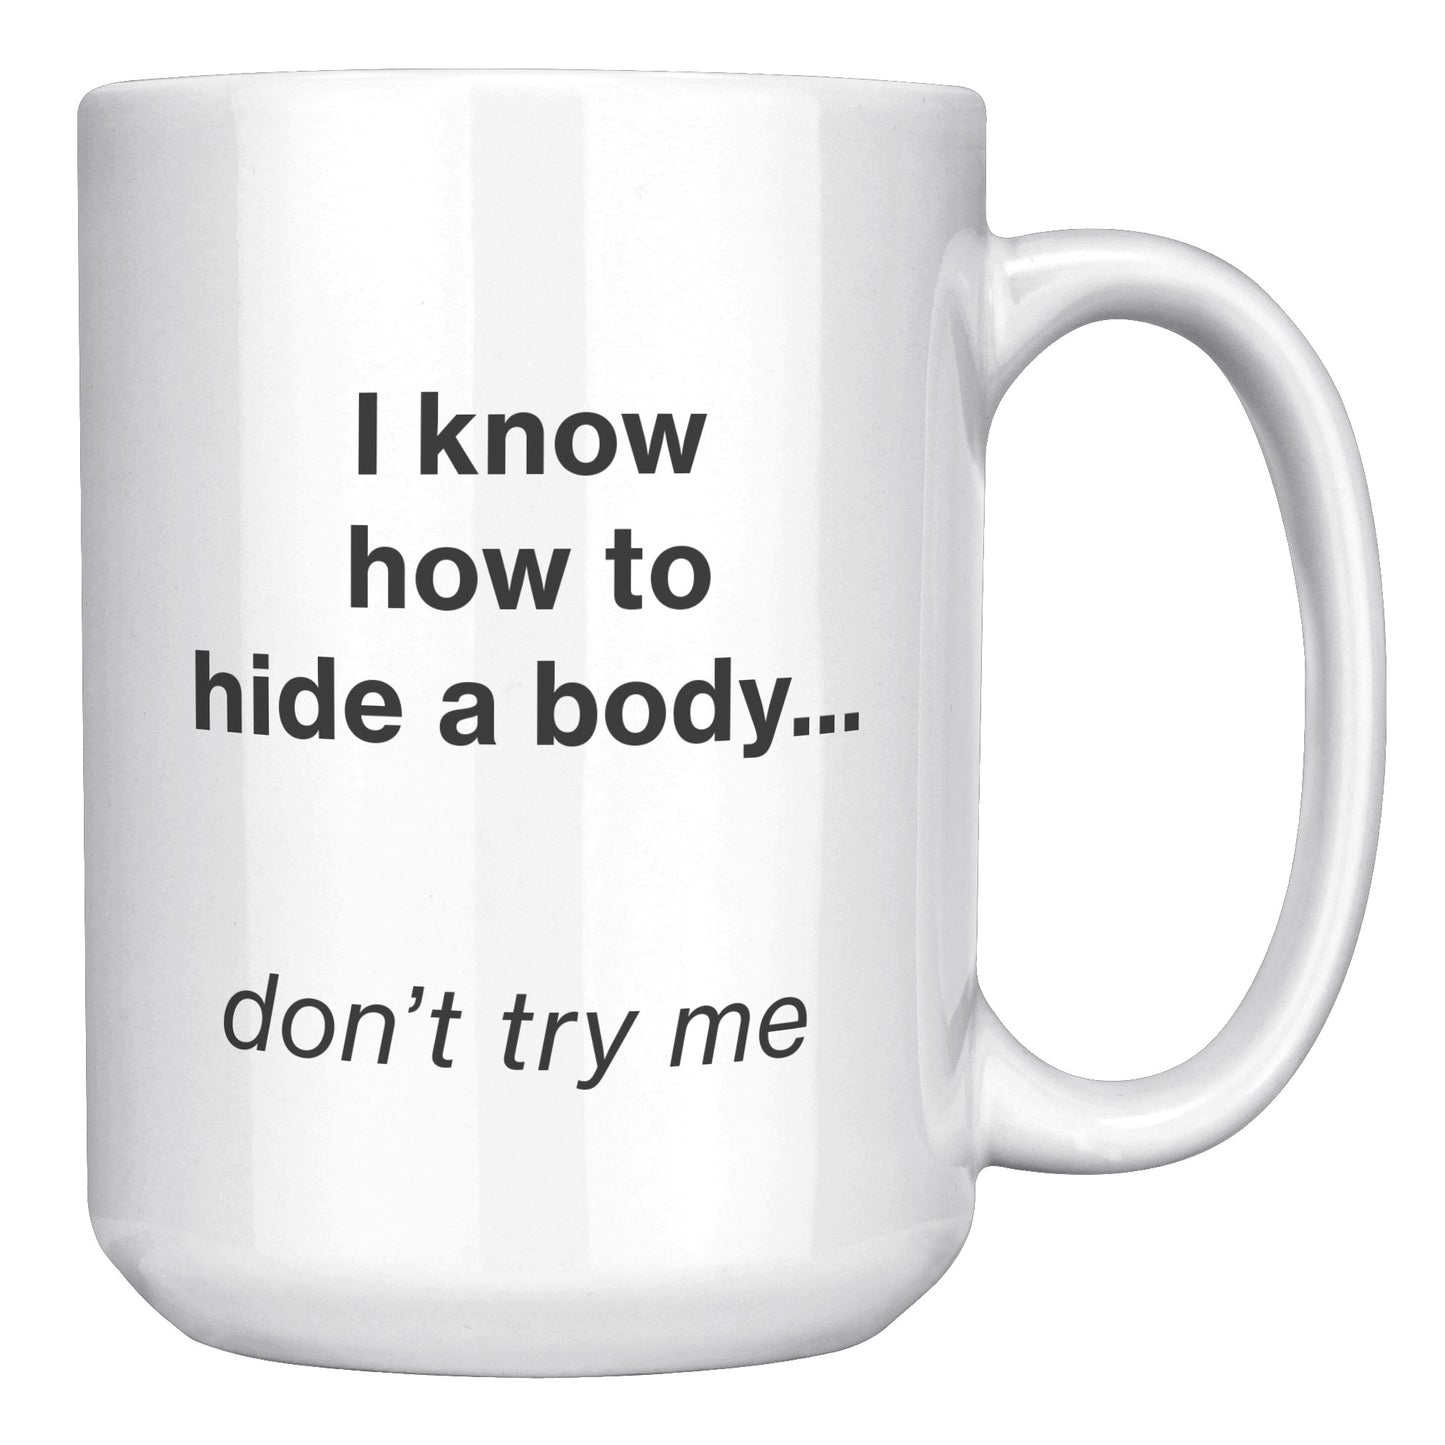 Hide a Body mug - white